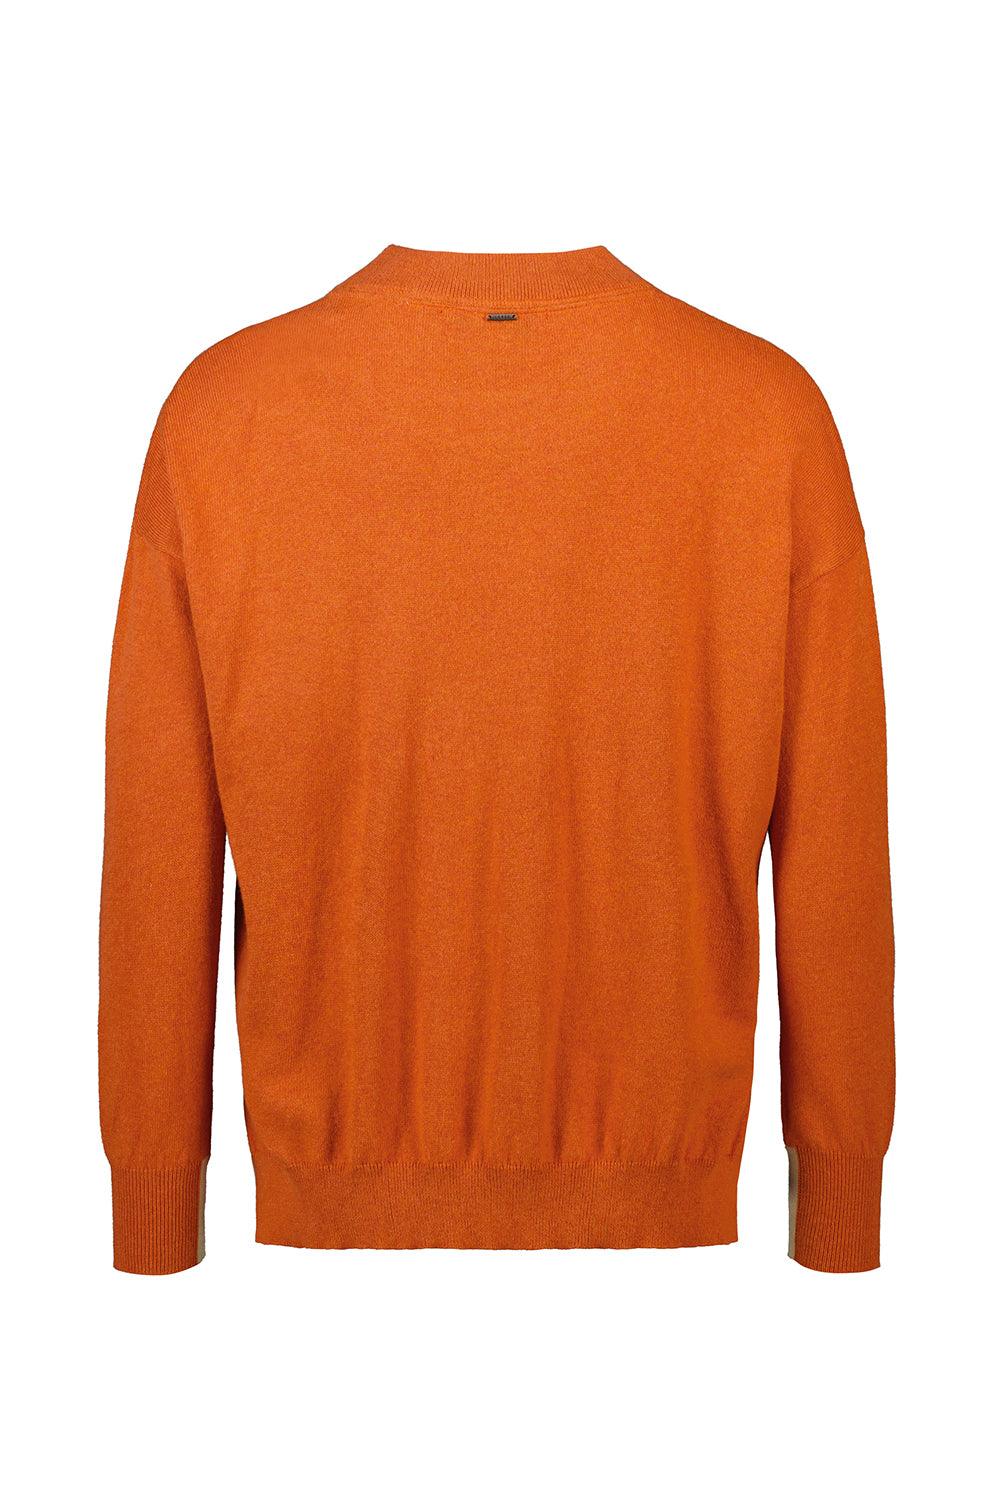 Lost Sweater - Clementine - Sweater VERGE